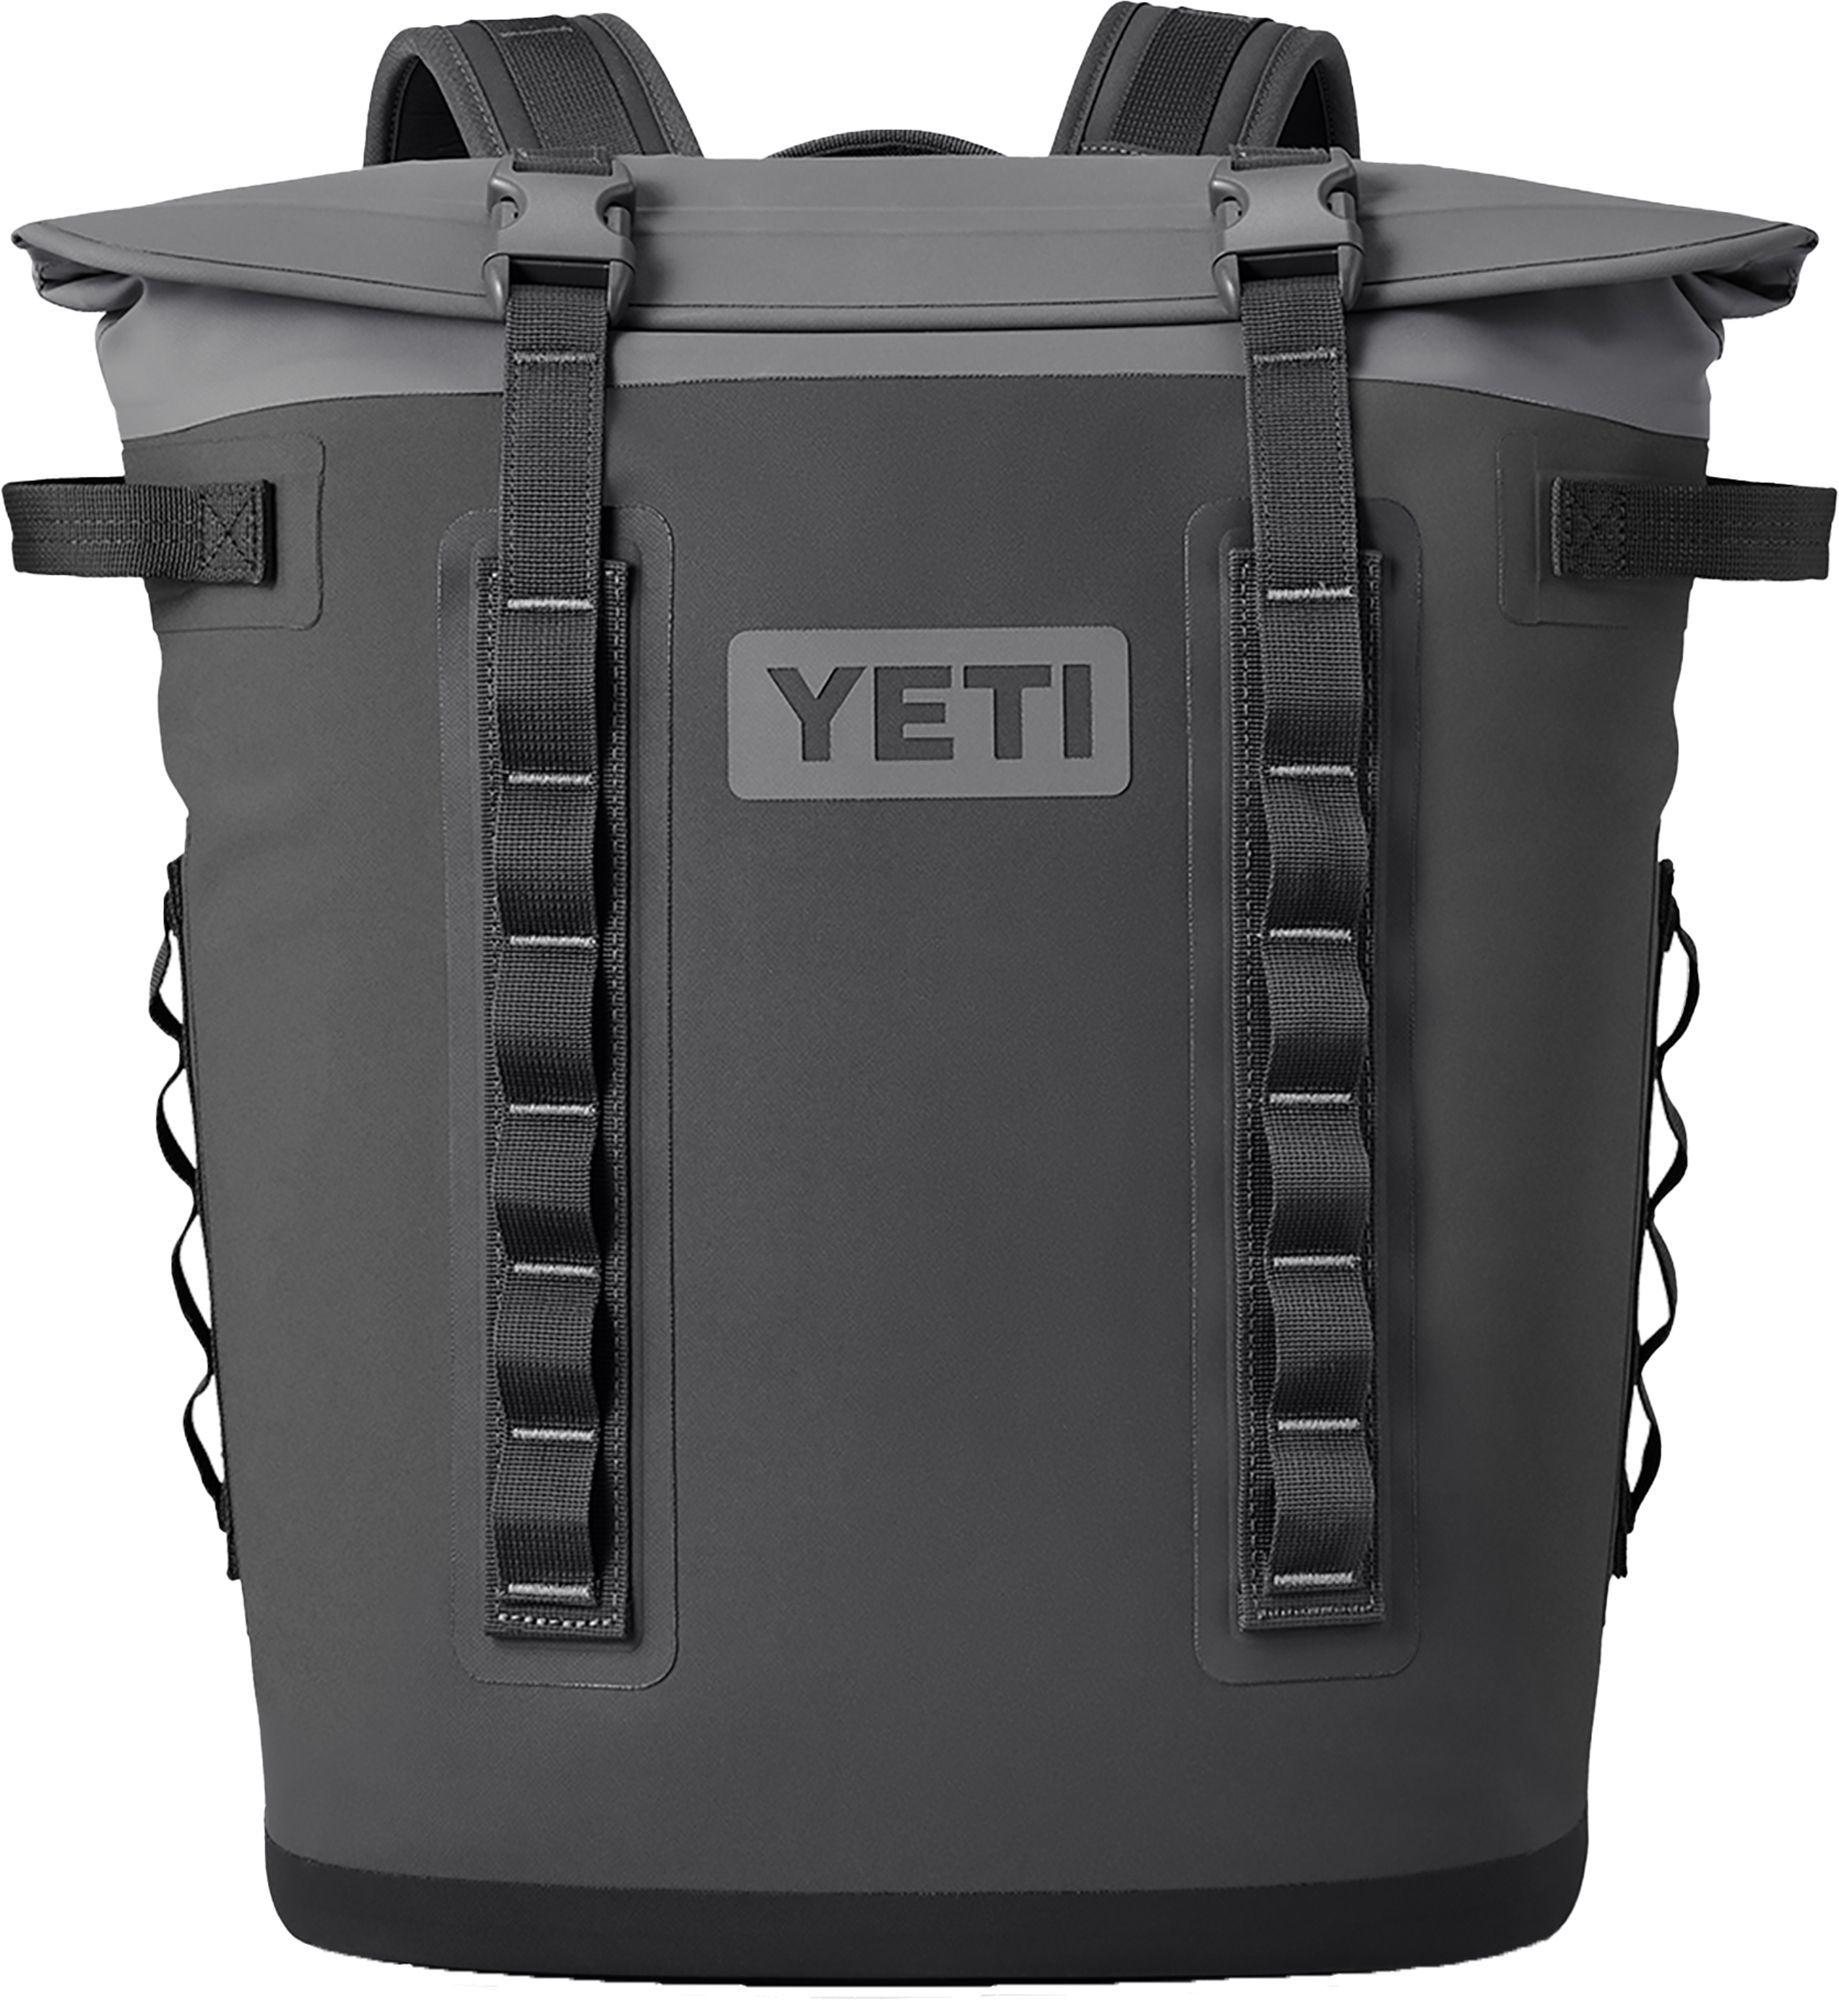 YETI Hopper M20 Backpack Cooler, Charcoal | Dick's Sporting Goods